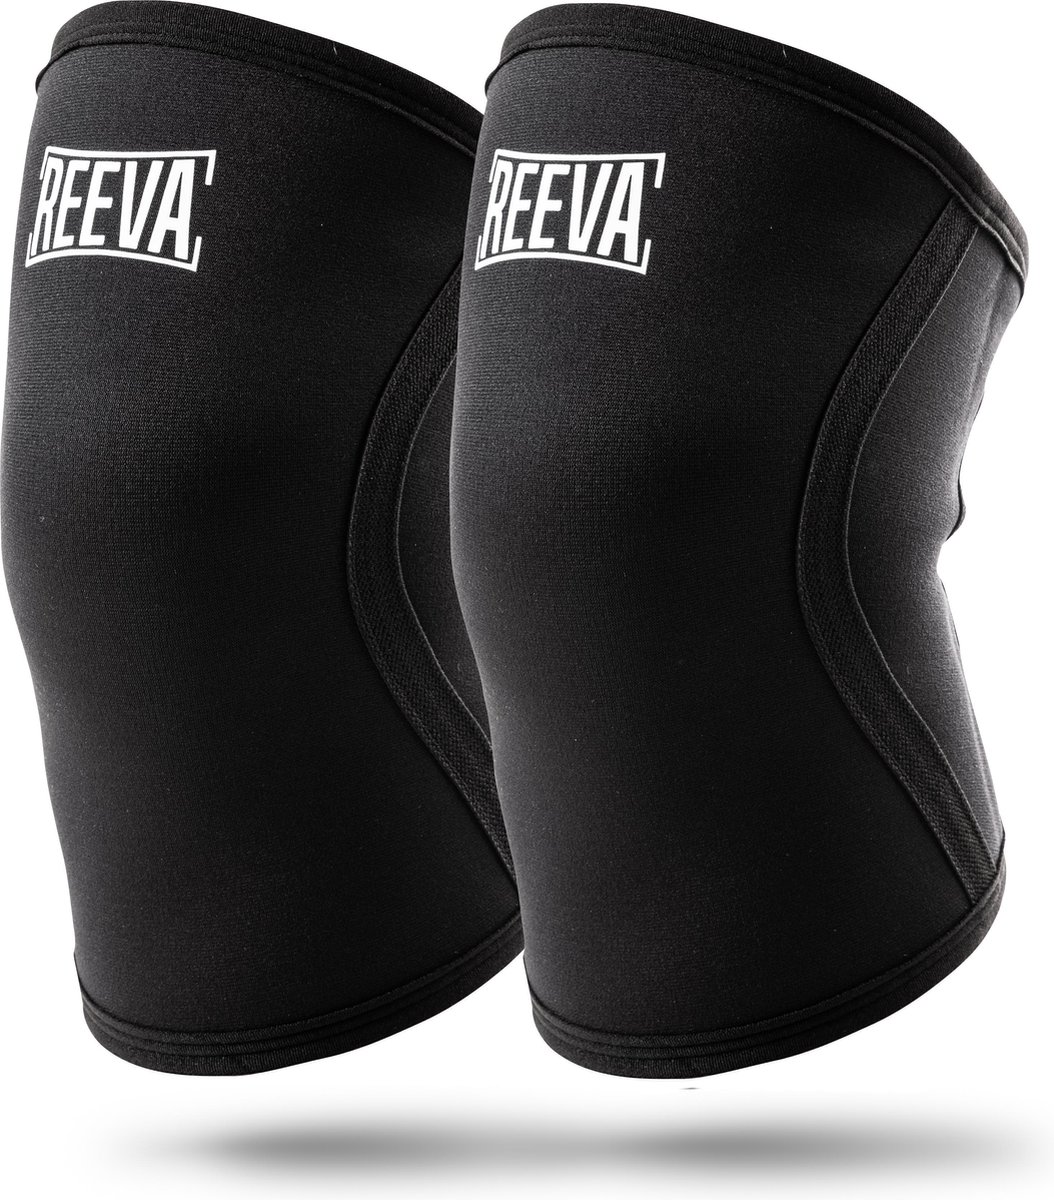 Reeva Knee Sleeves 5mm voor Fitness, Gewichtheffen & CrossFit - Maat M - Knie Brace - Verkocht per paar